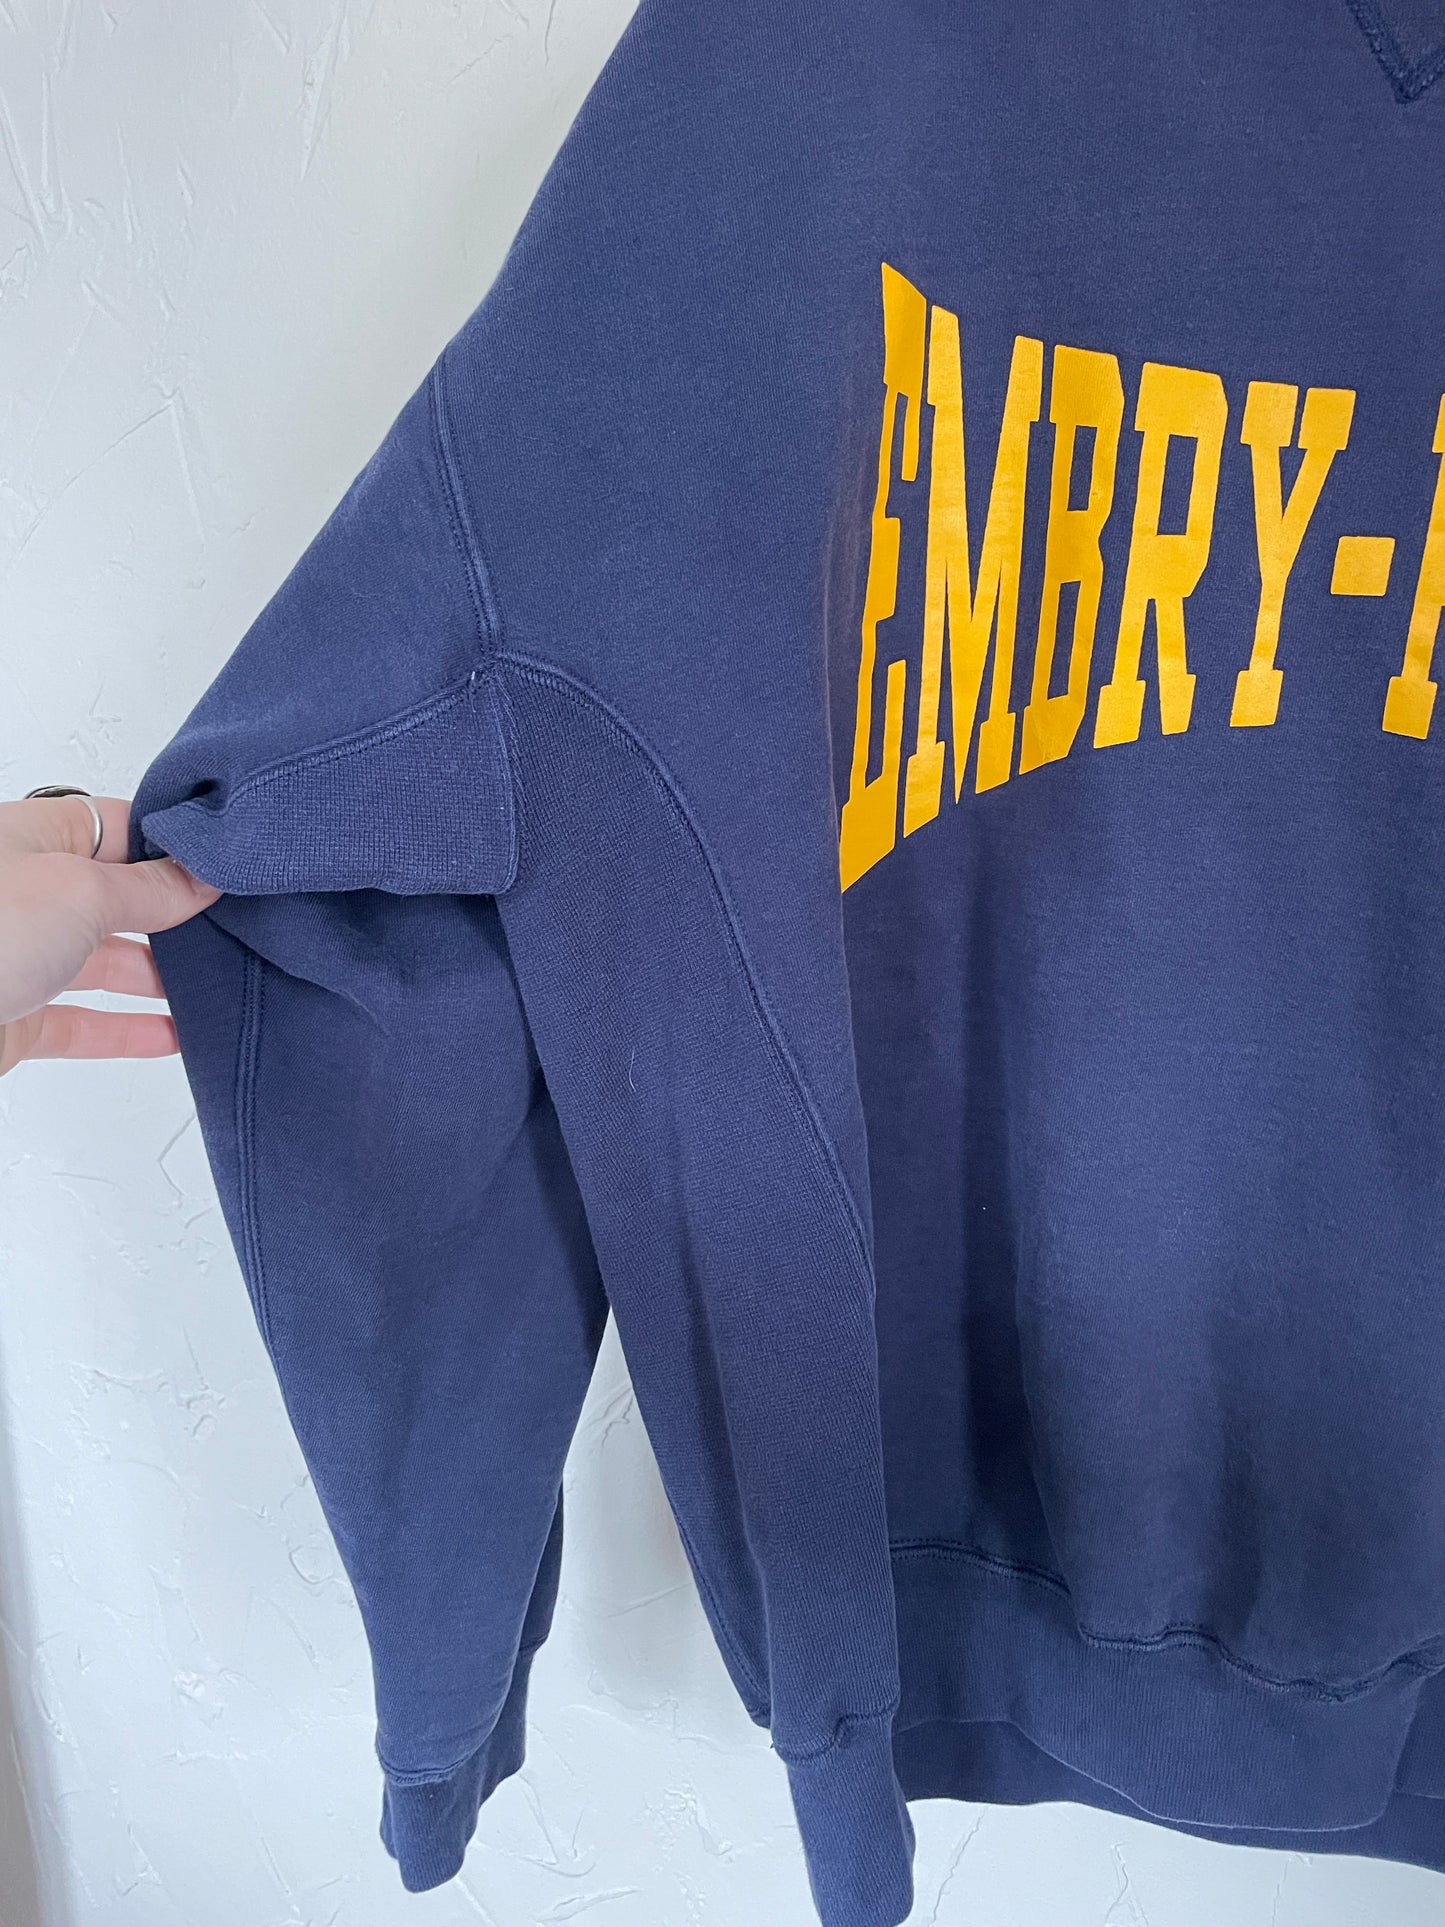 90s Embry-Riddle Sweatshirt